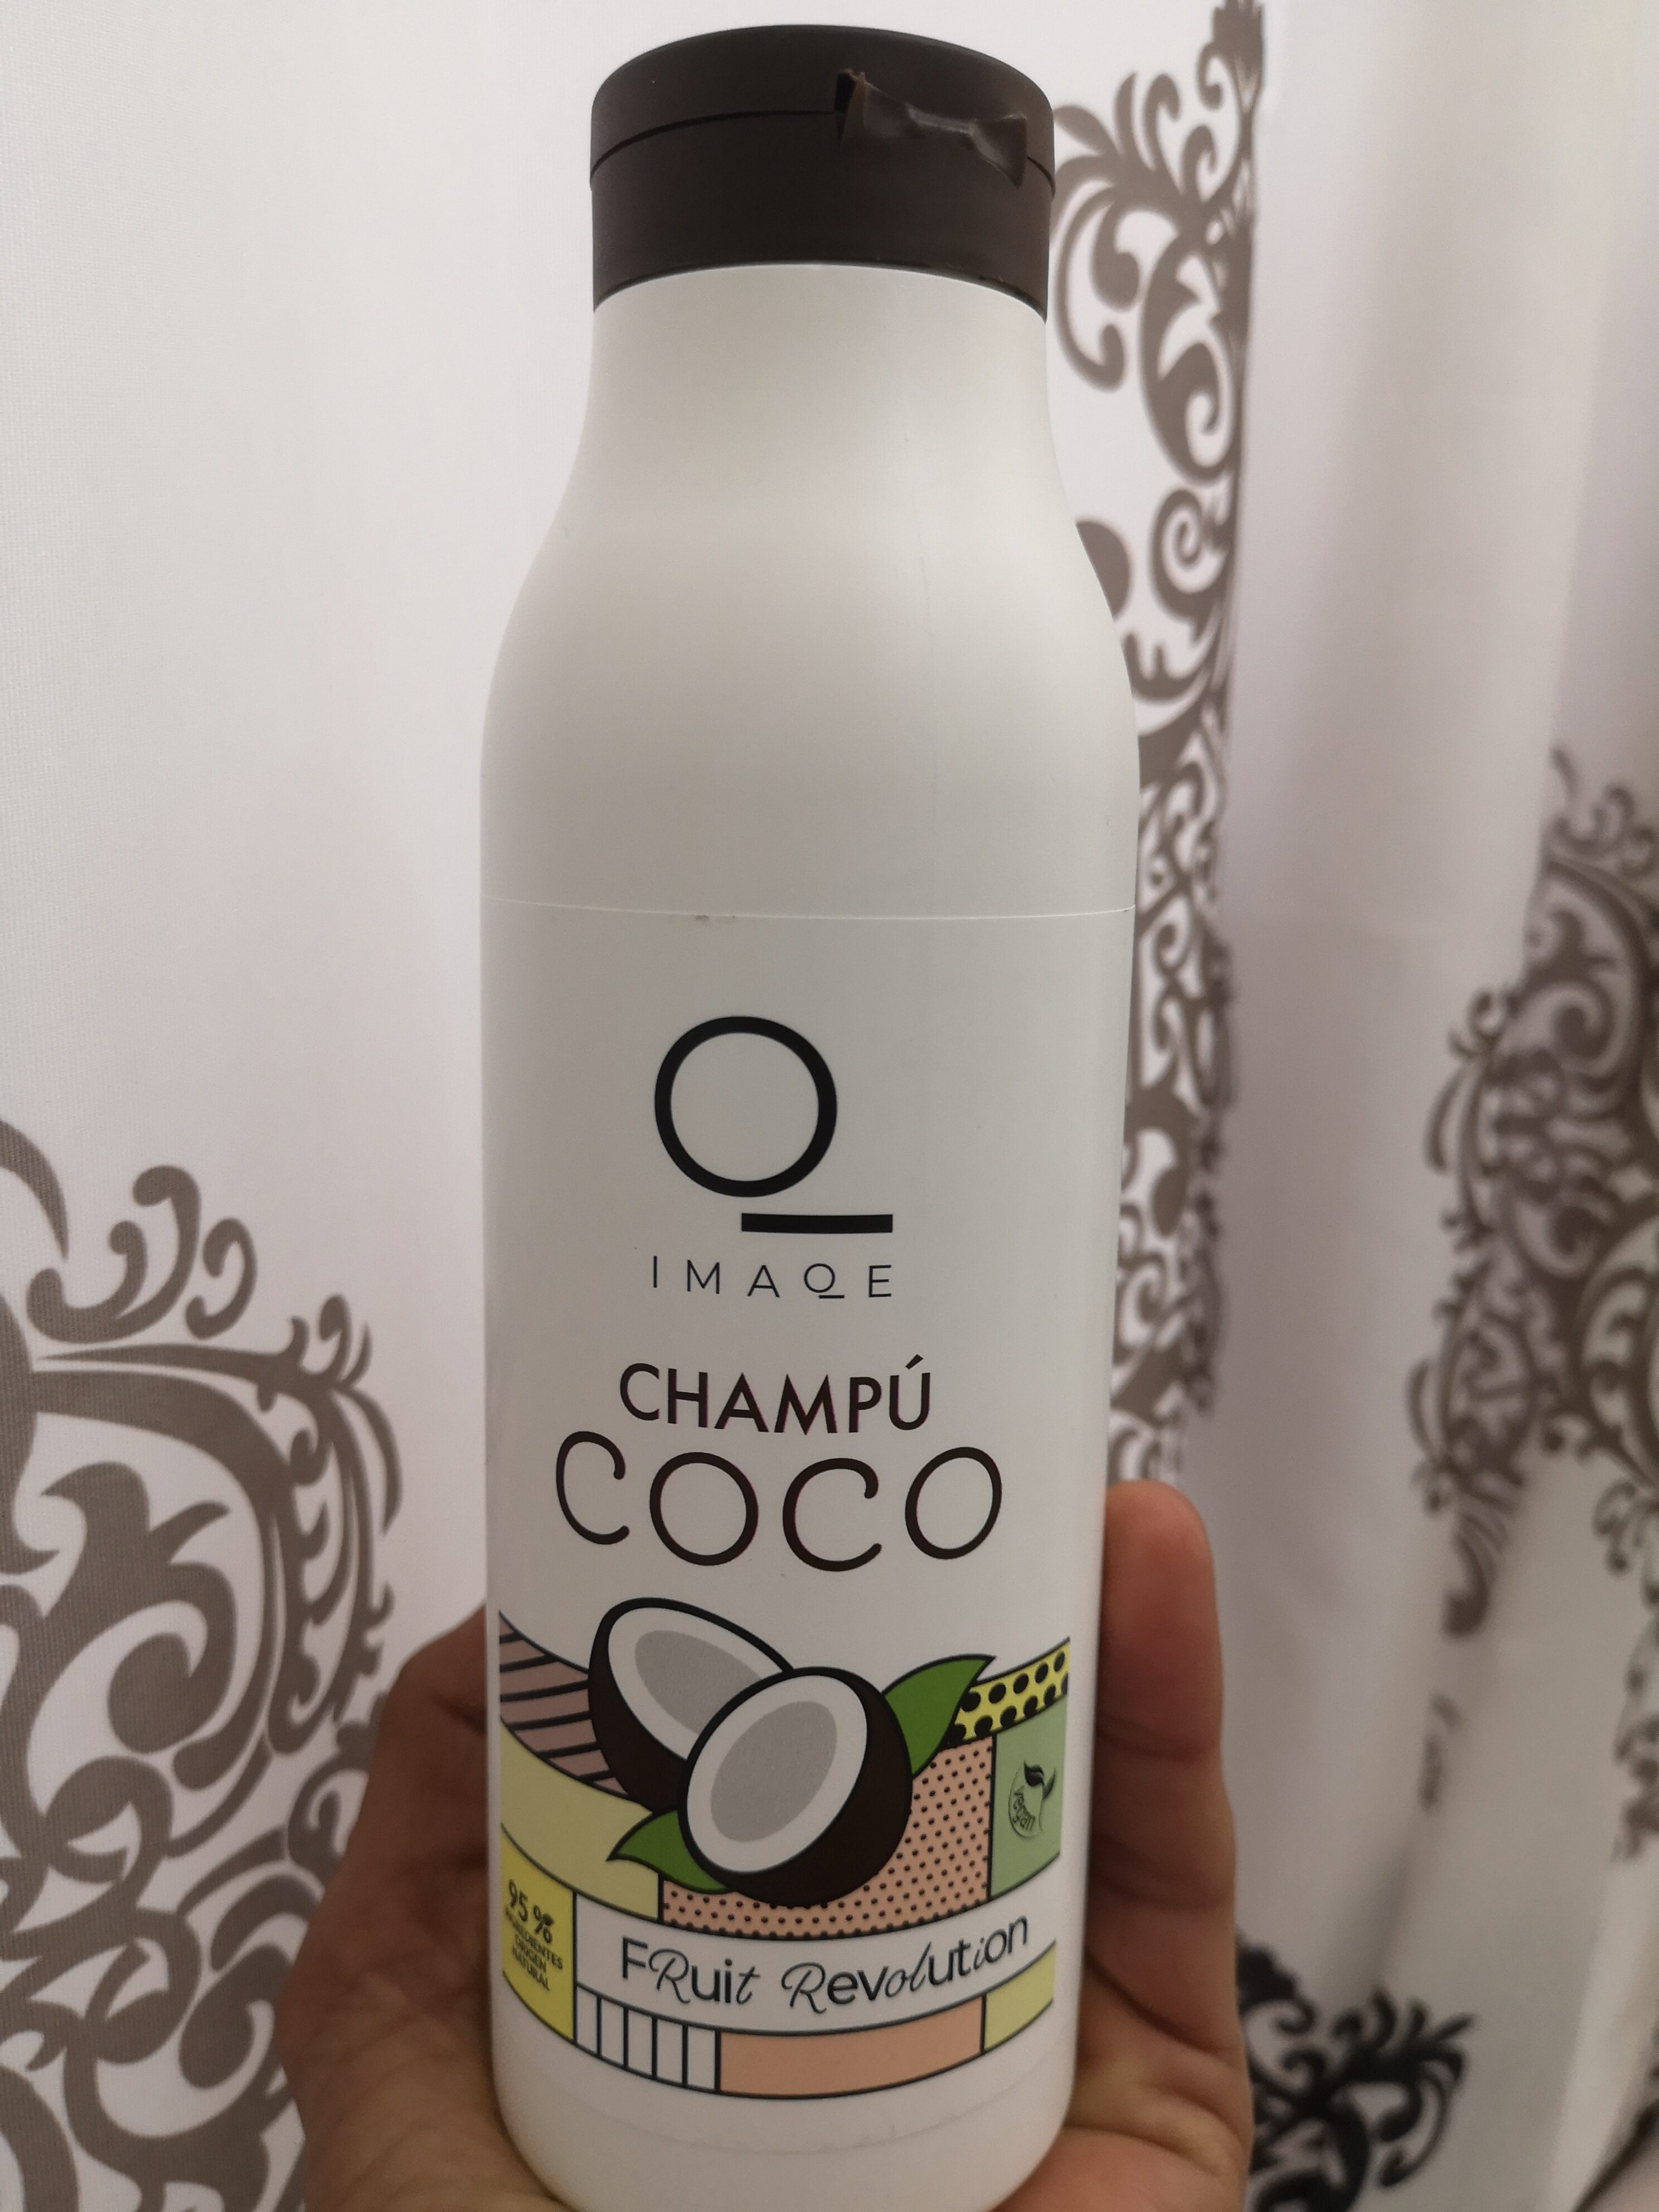 Champú coco - Producte - es